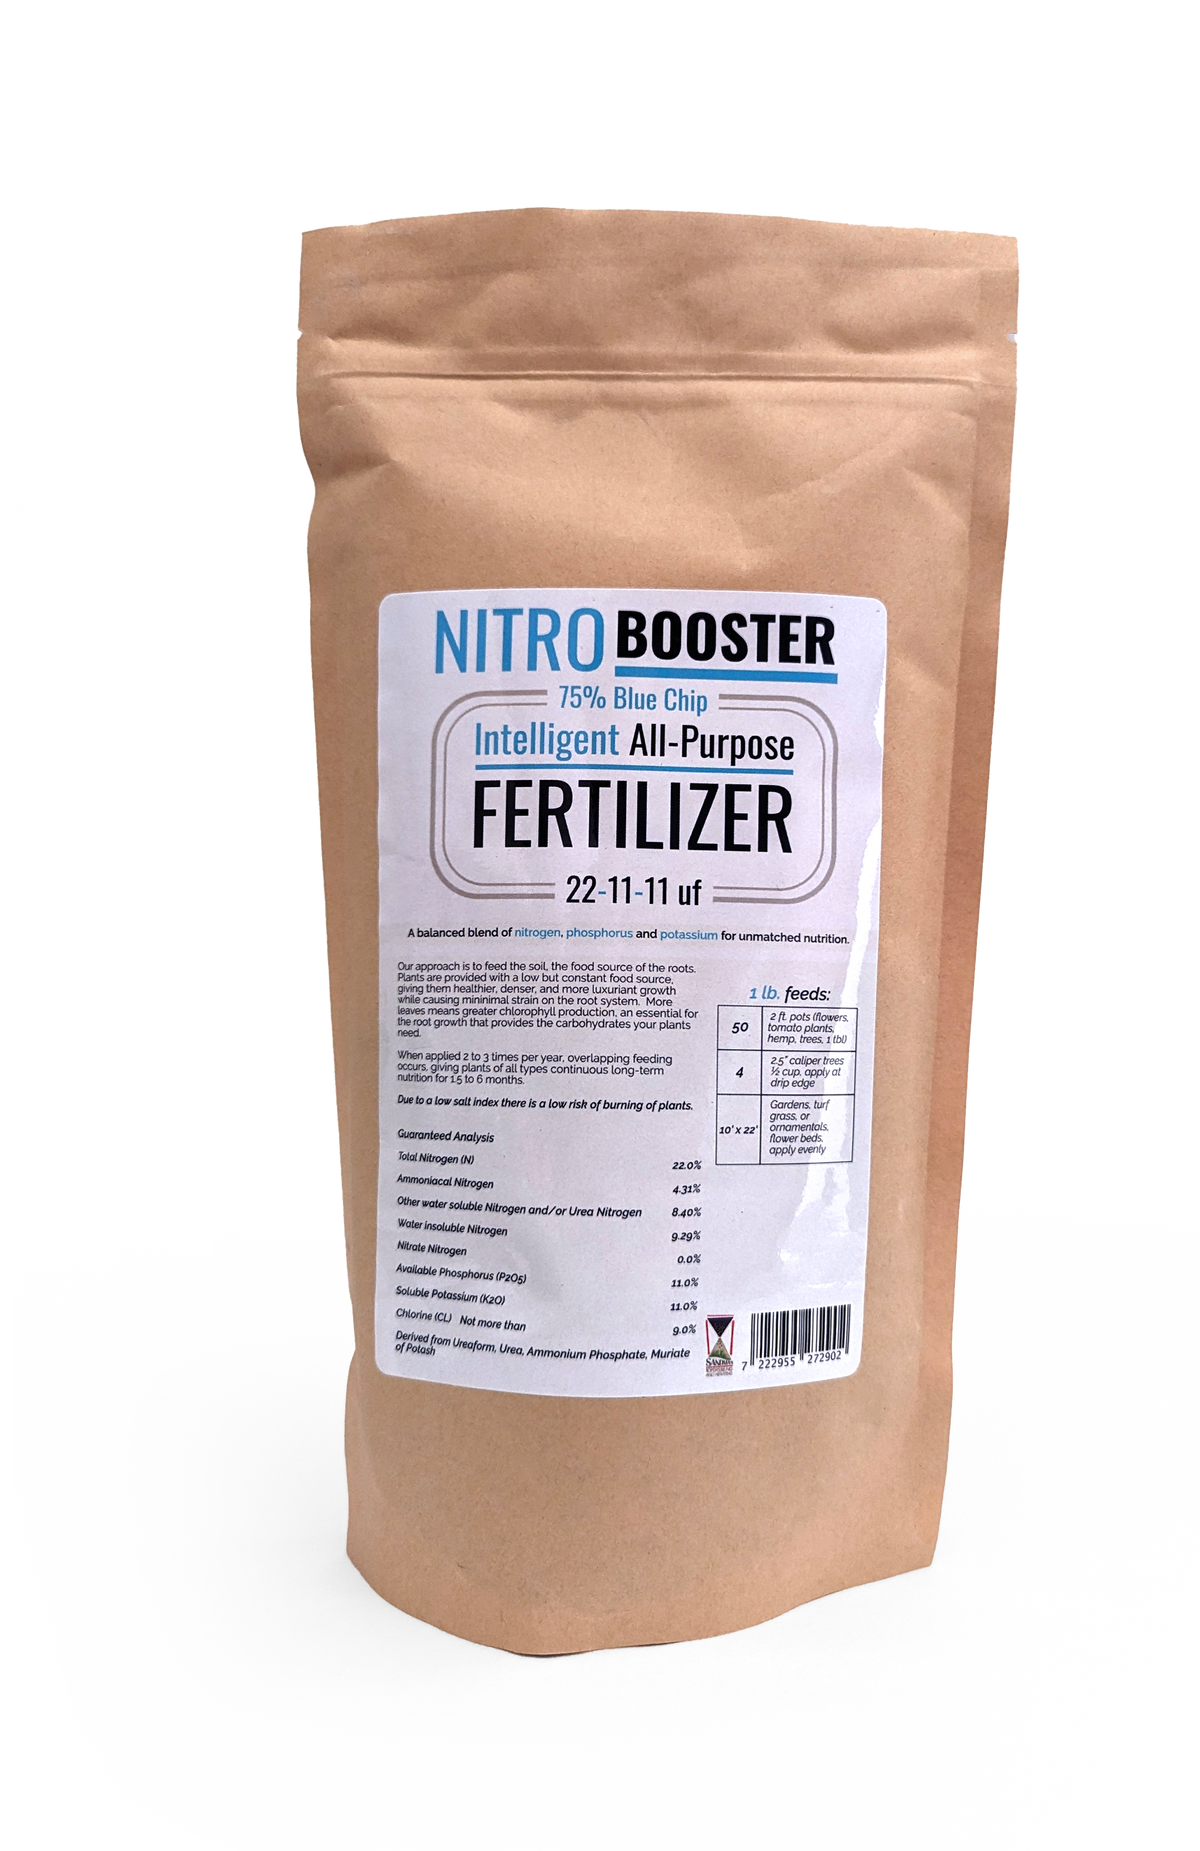 NitroBooster® Intelligent All-Purpose Fertilizer (22-11-11 uf)